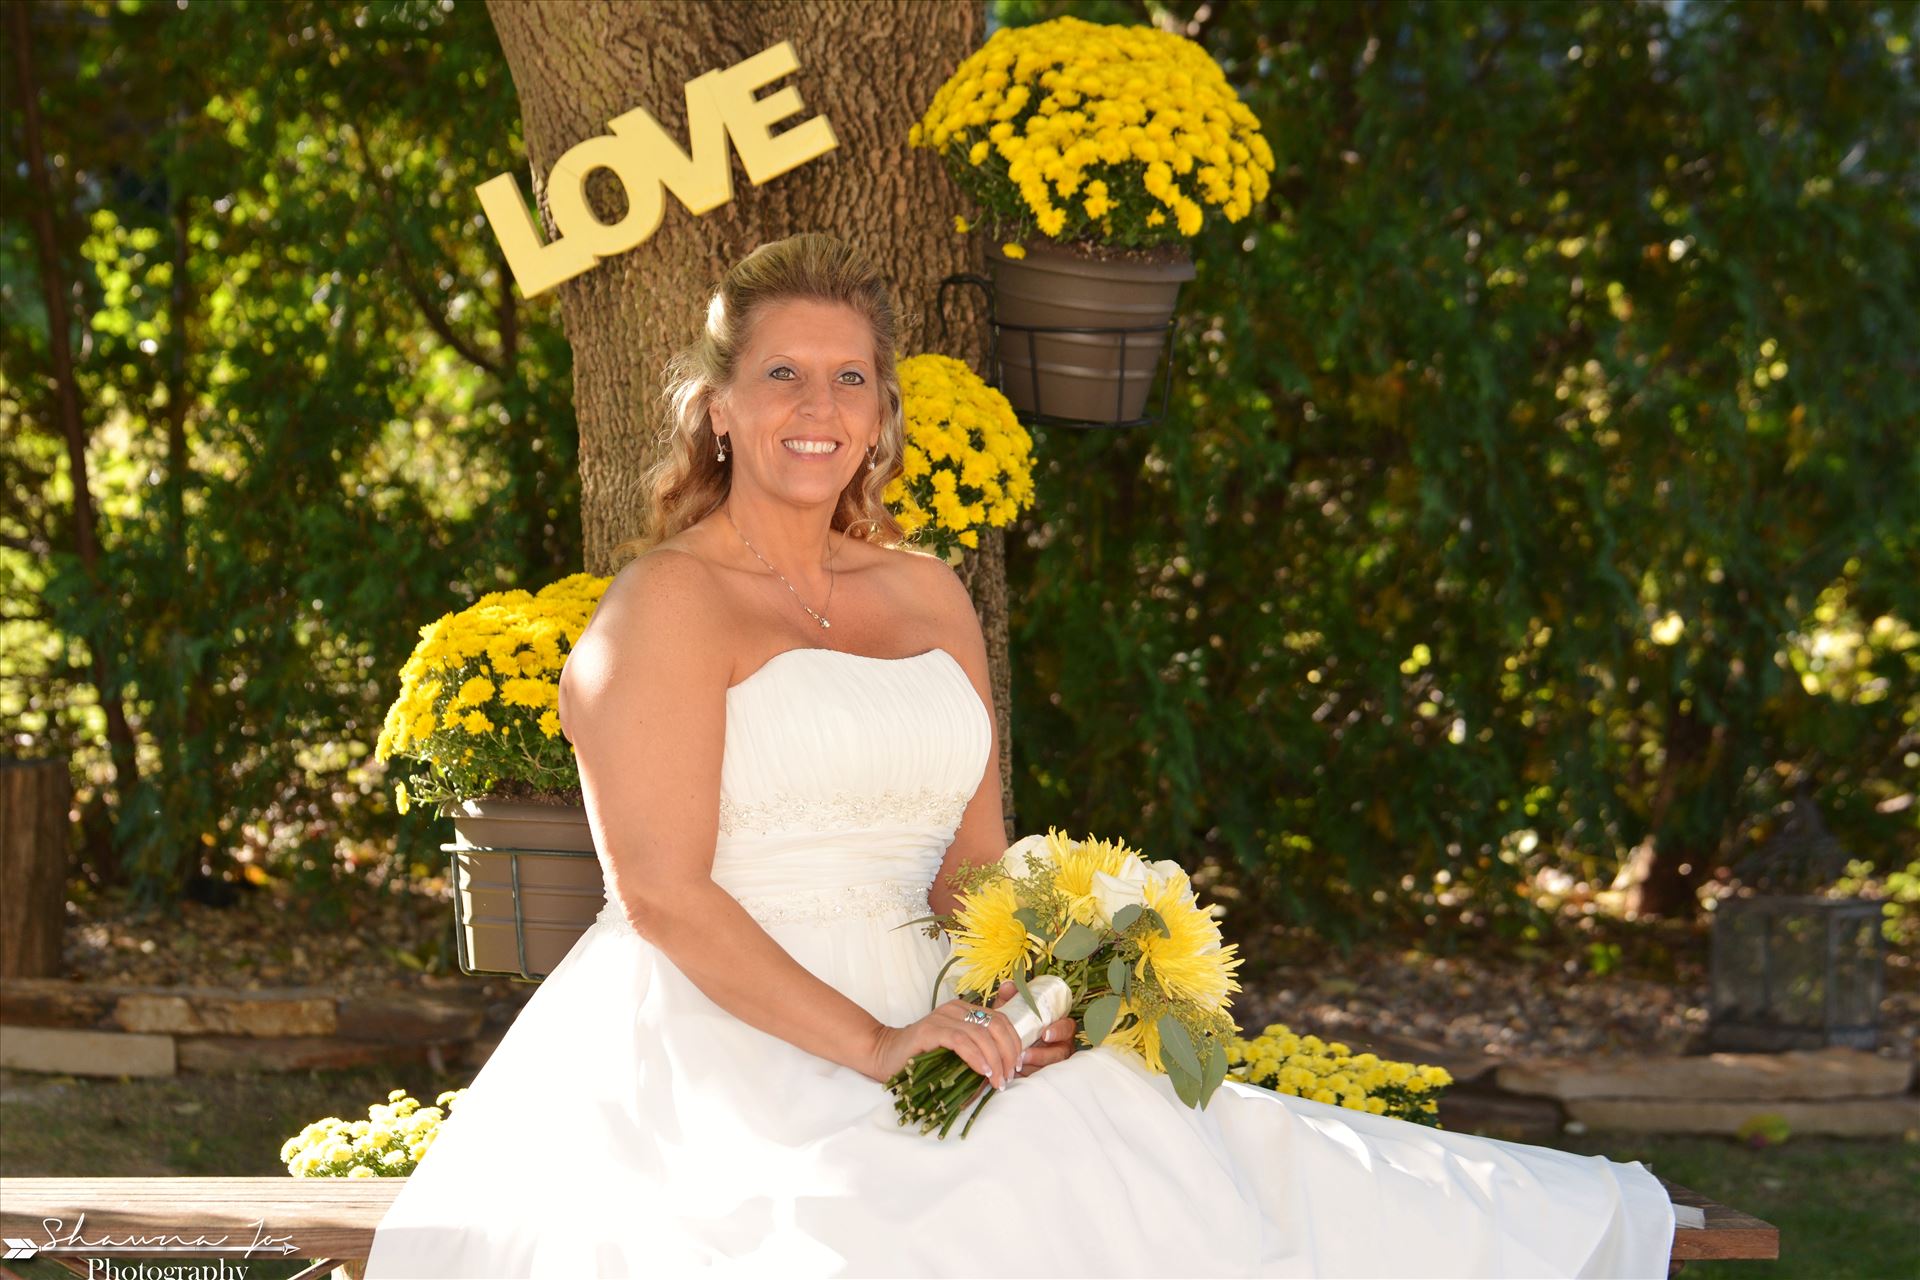 BucklesWedding5.jpg - Gorgeous bride by Shawna Jo Photography